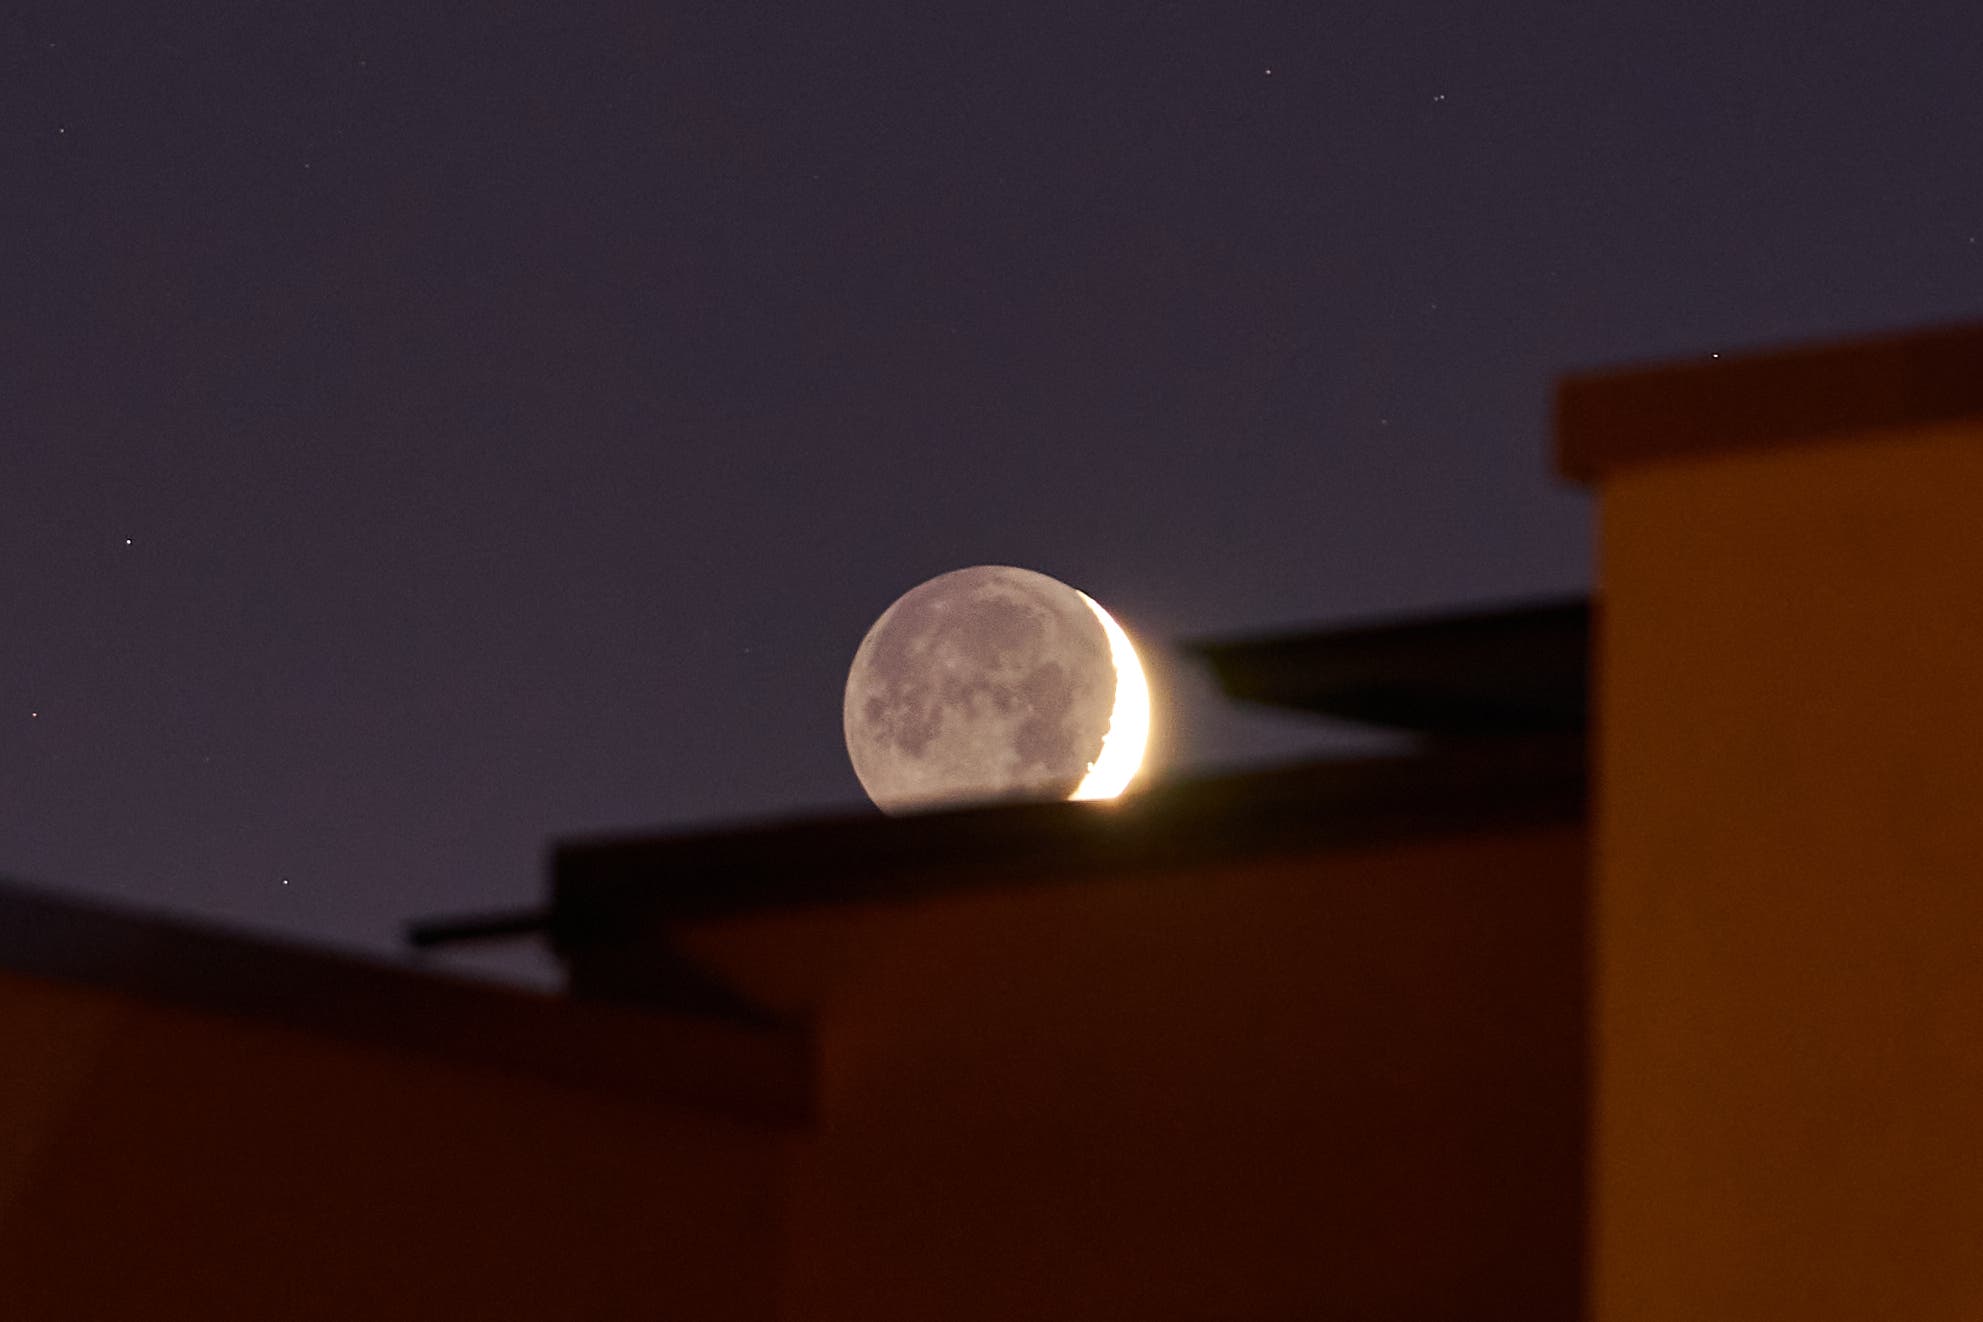 Monduntergang